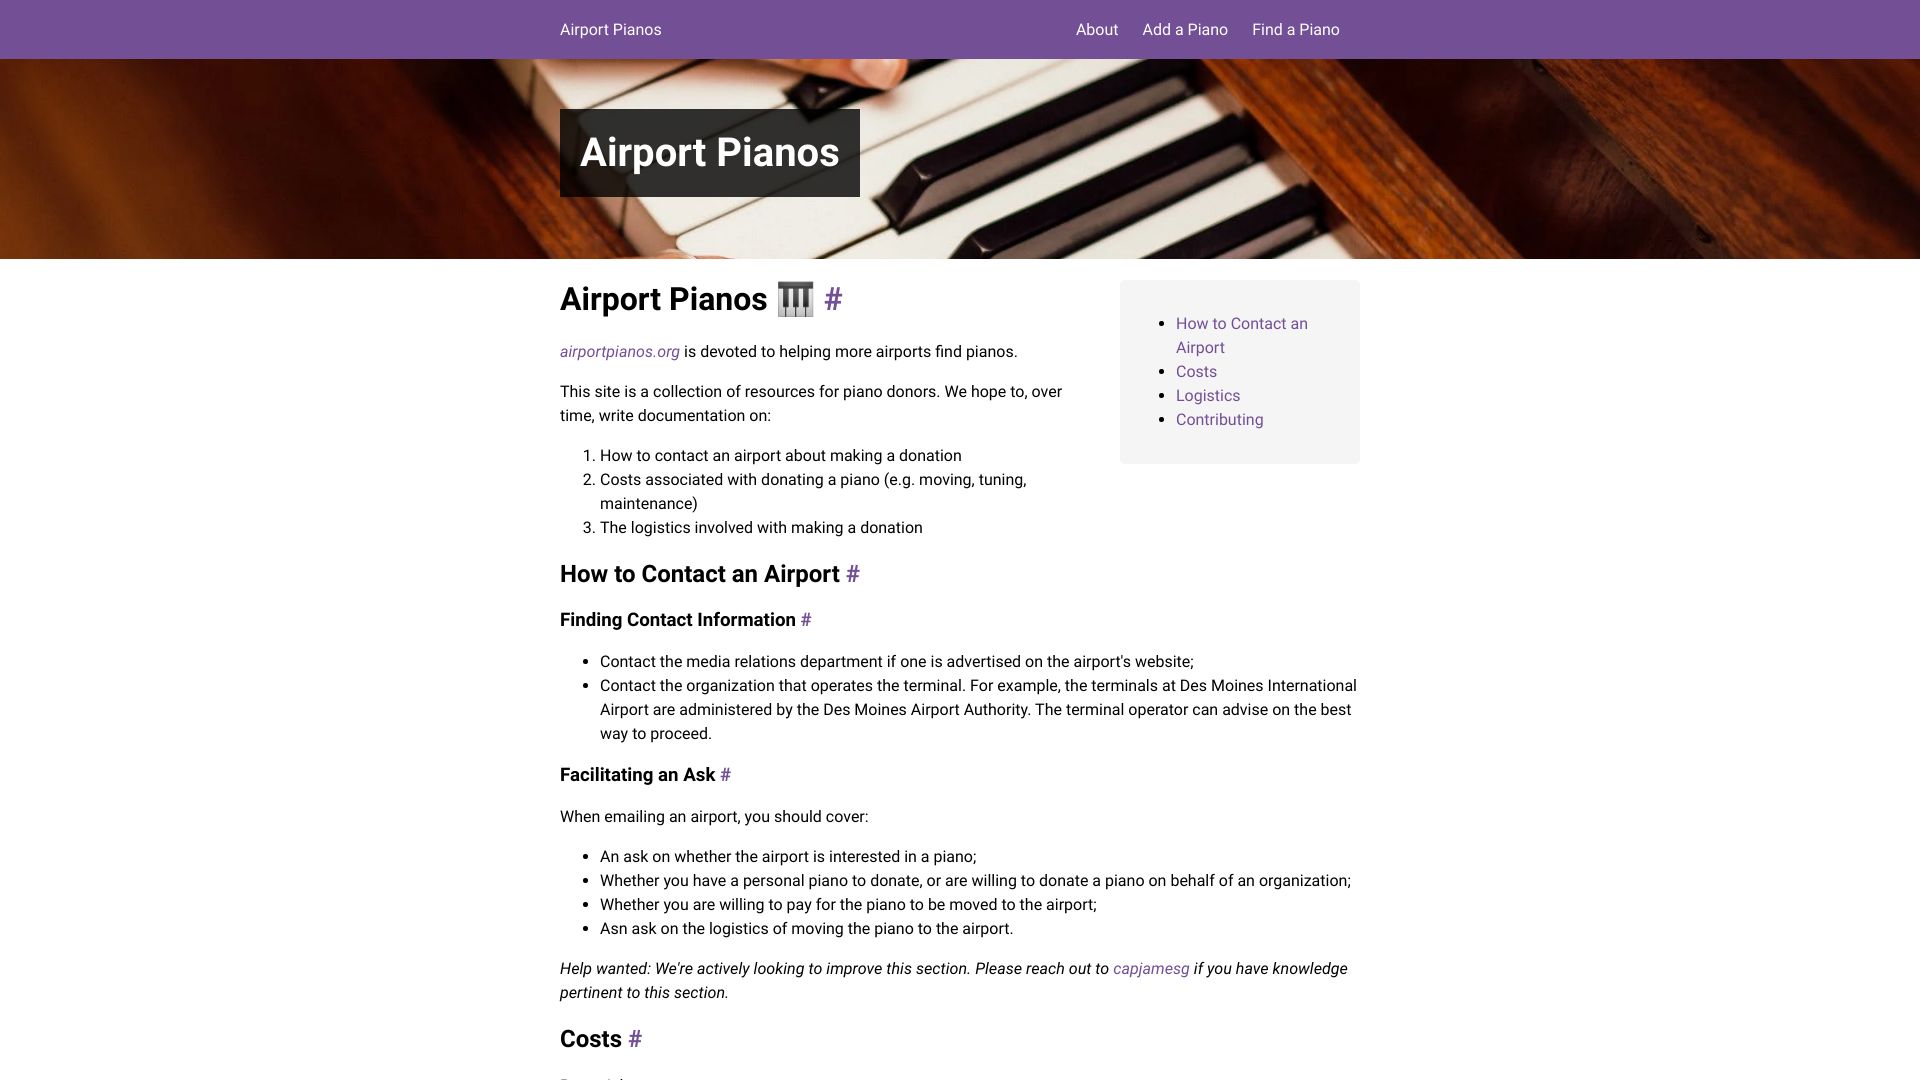  - airport-pianos-startup-thumbnail-image.jpg Listing Image